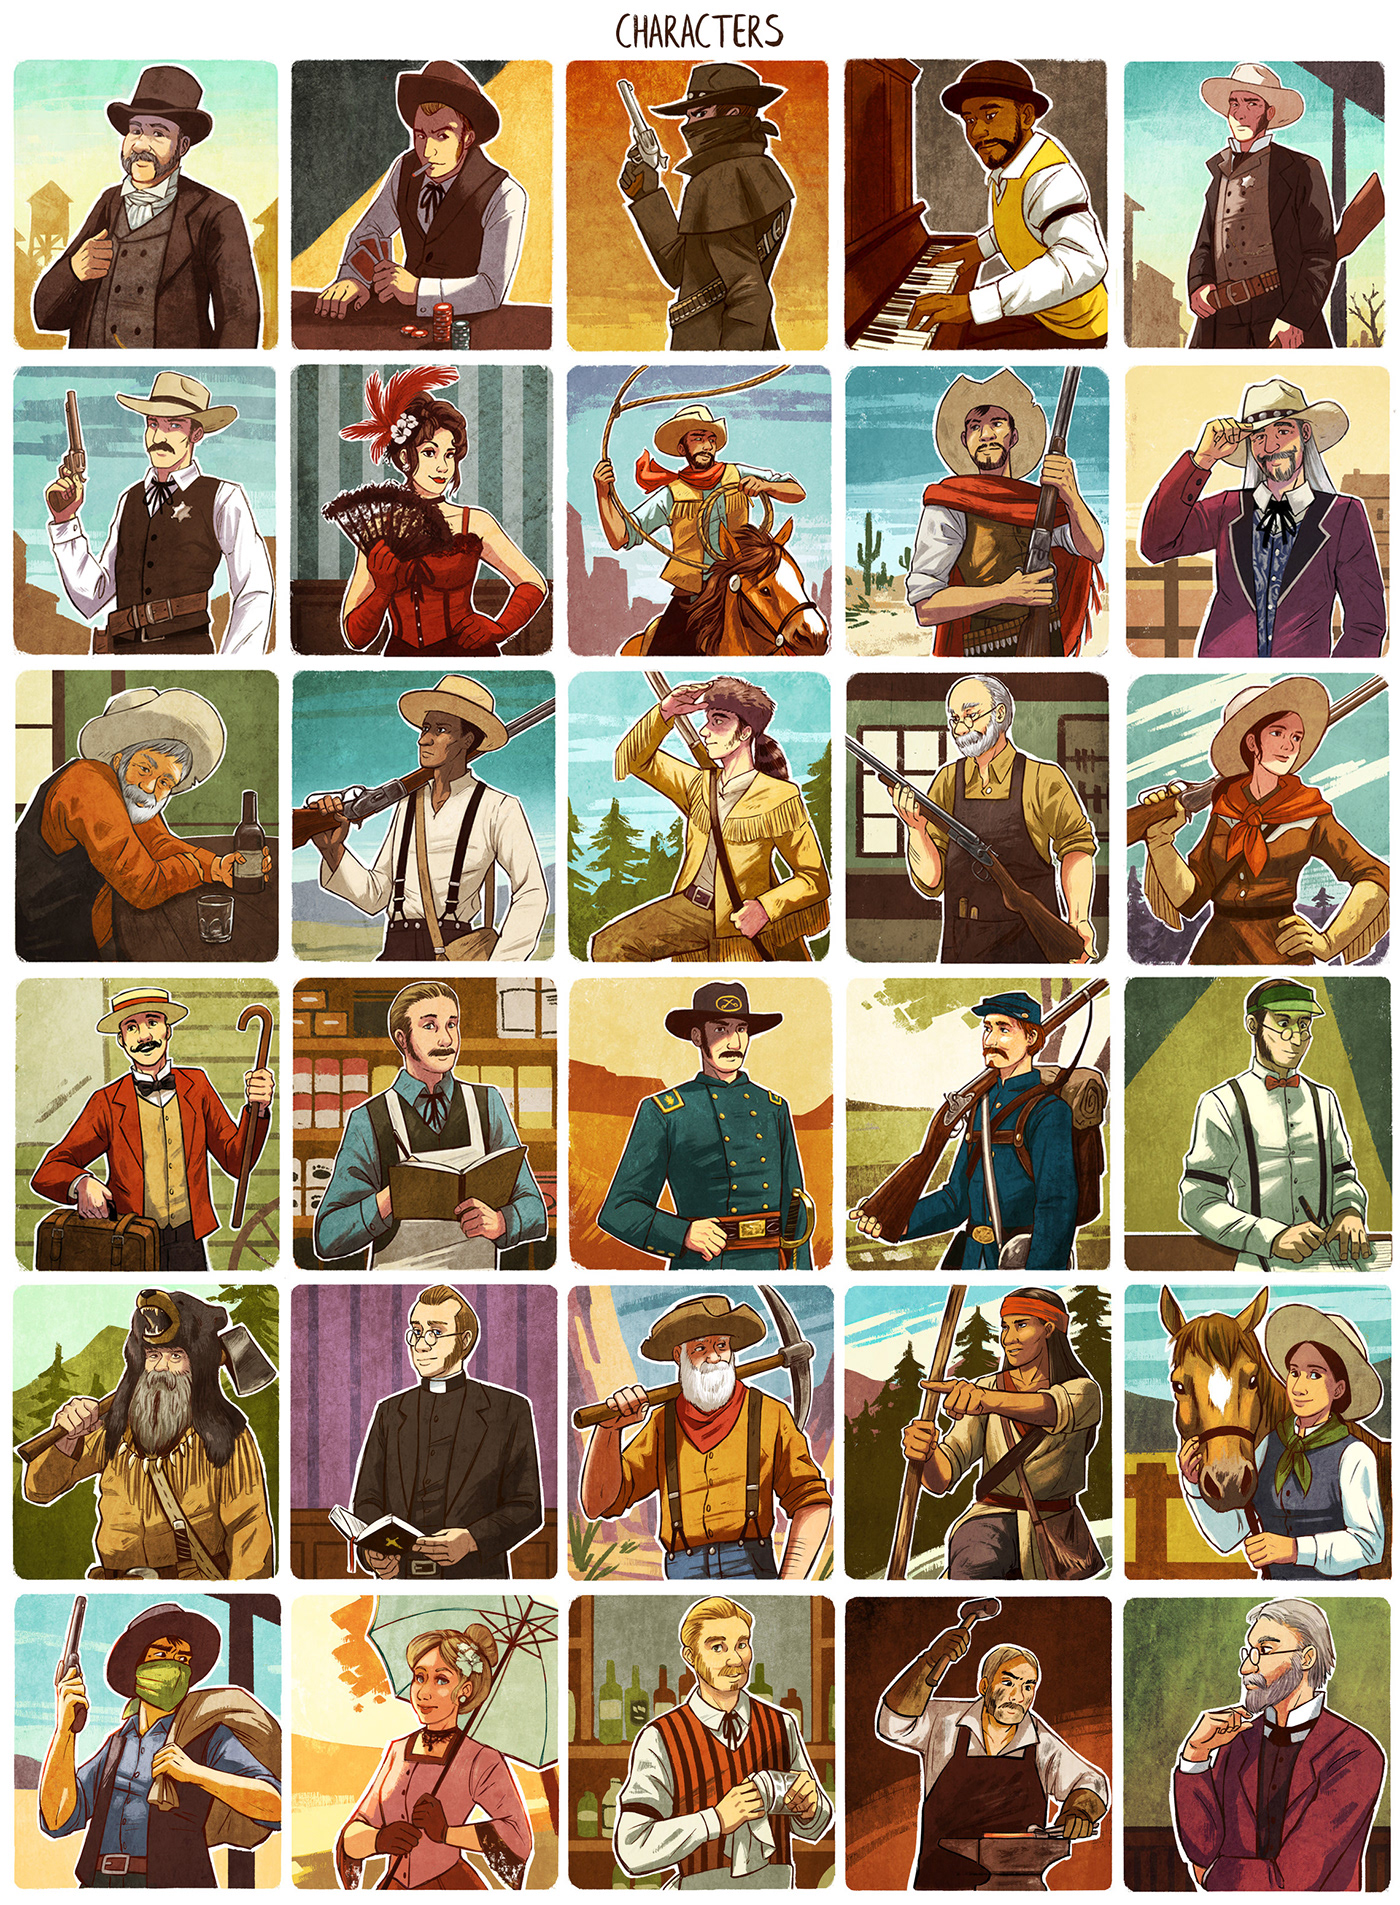 card game board game арт ILLUSTRATION  Digital Art  design western wild west cowboy history